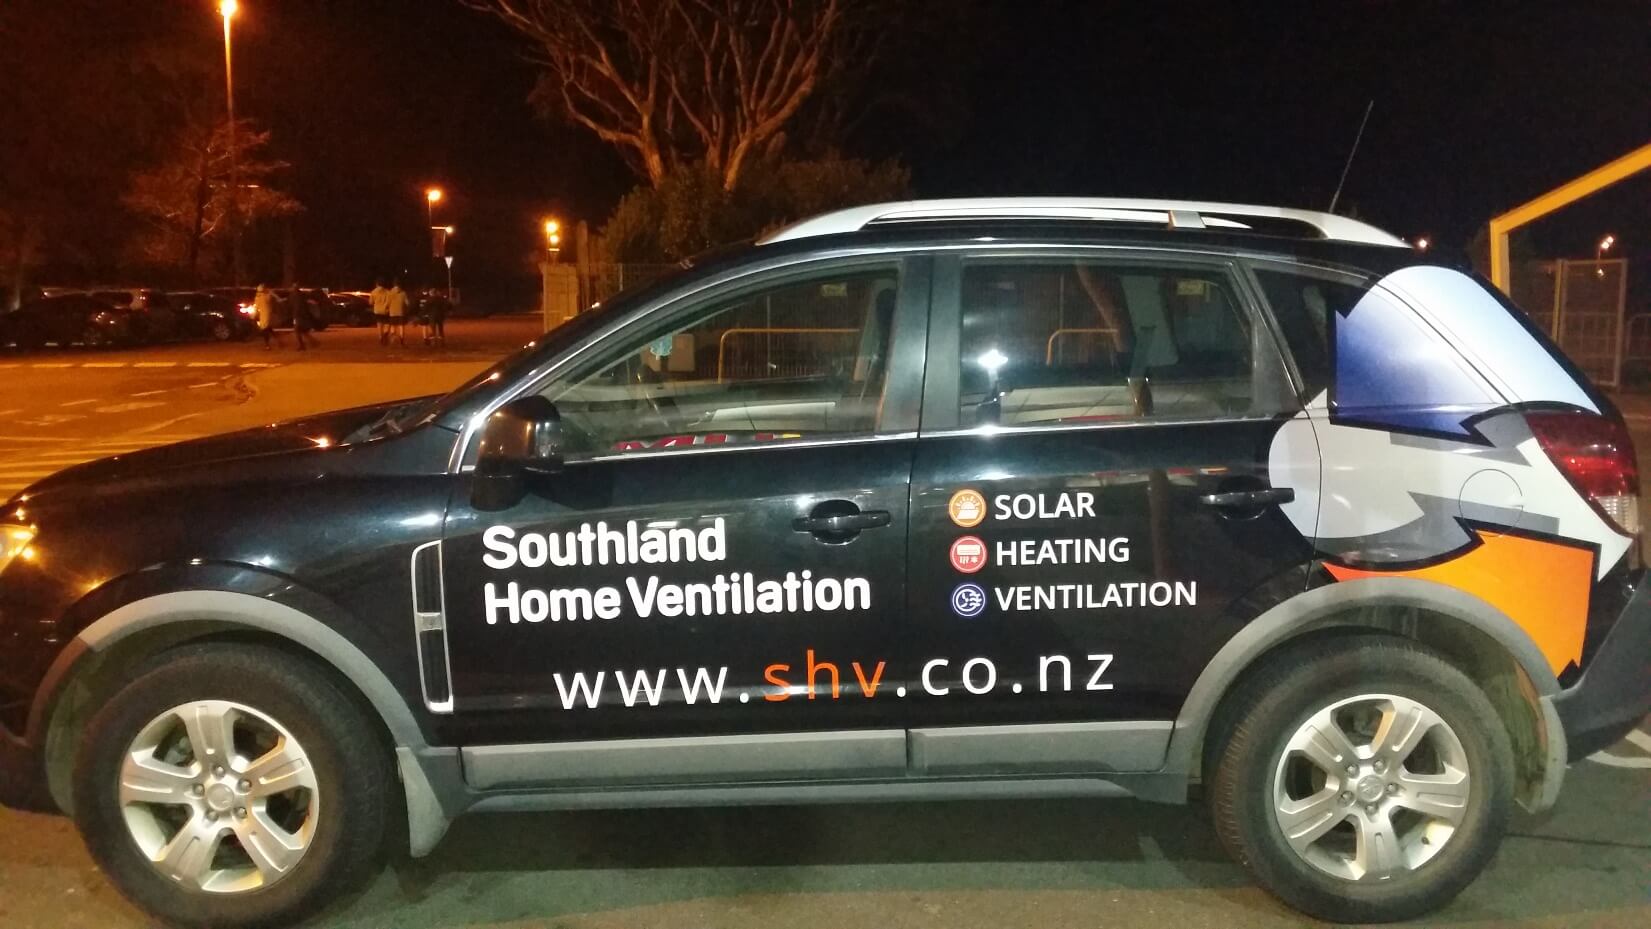 Southland Home Ventilation Van